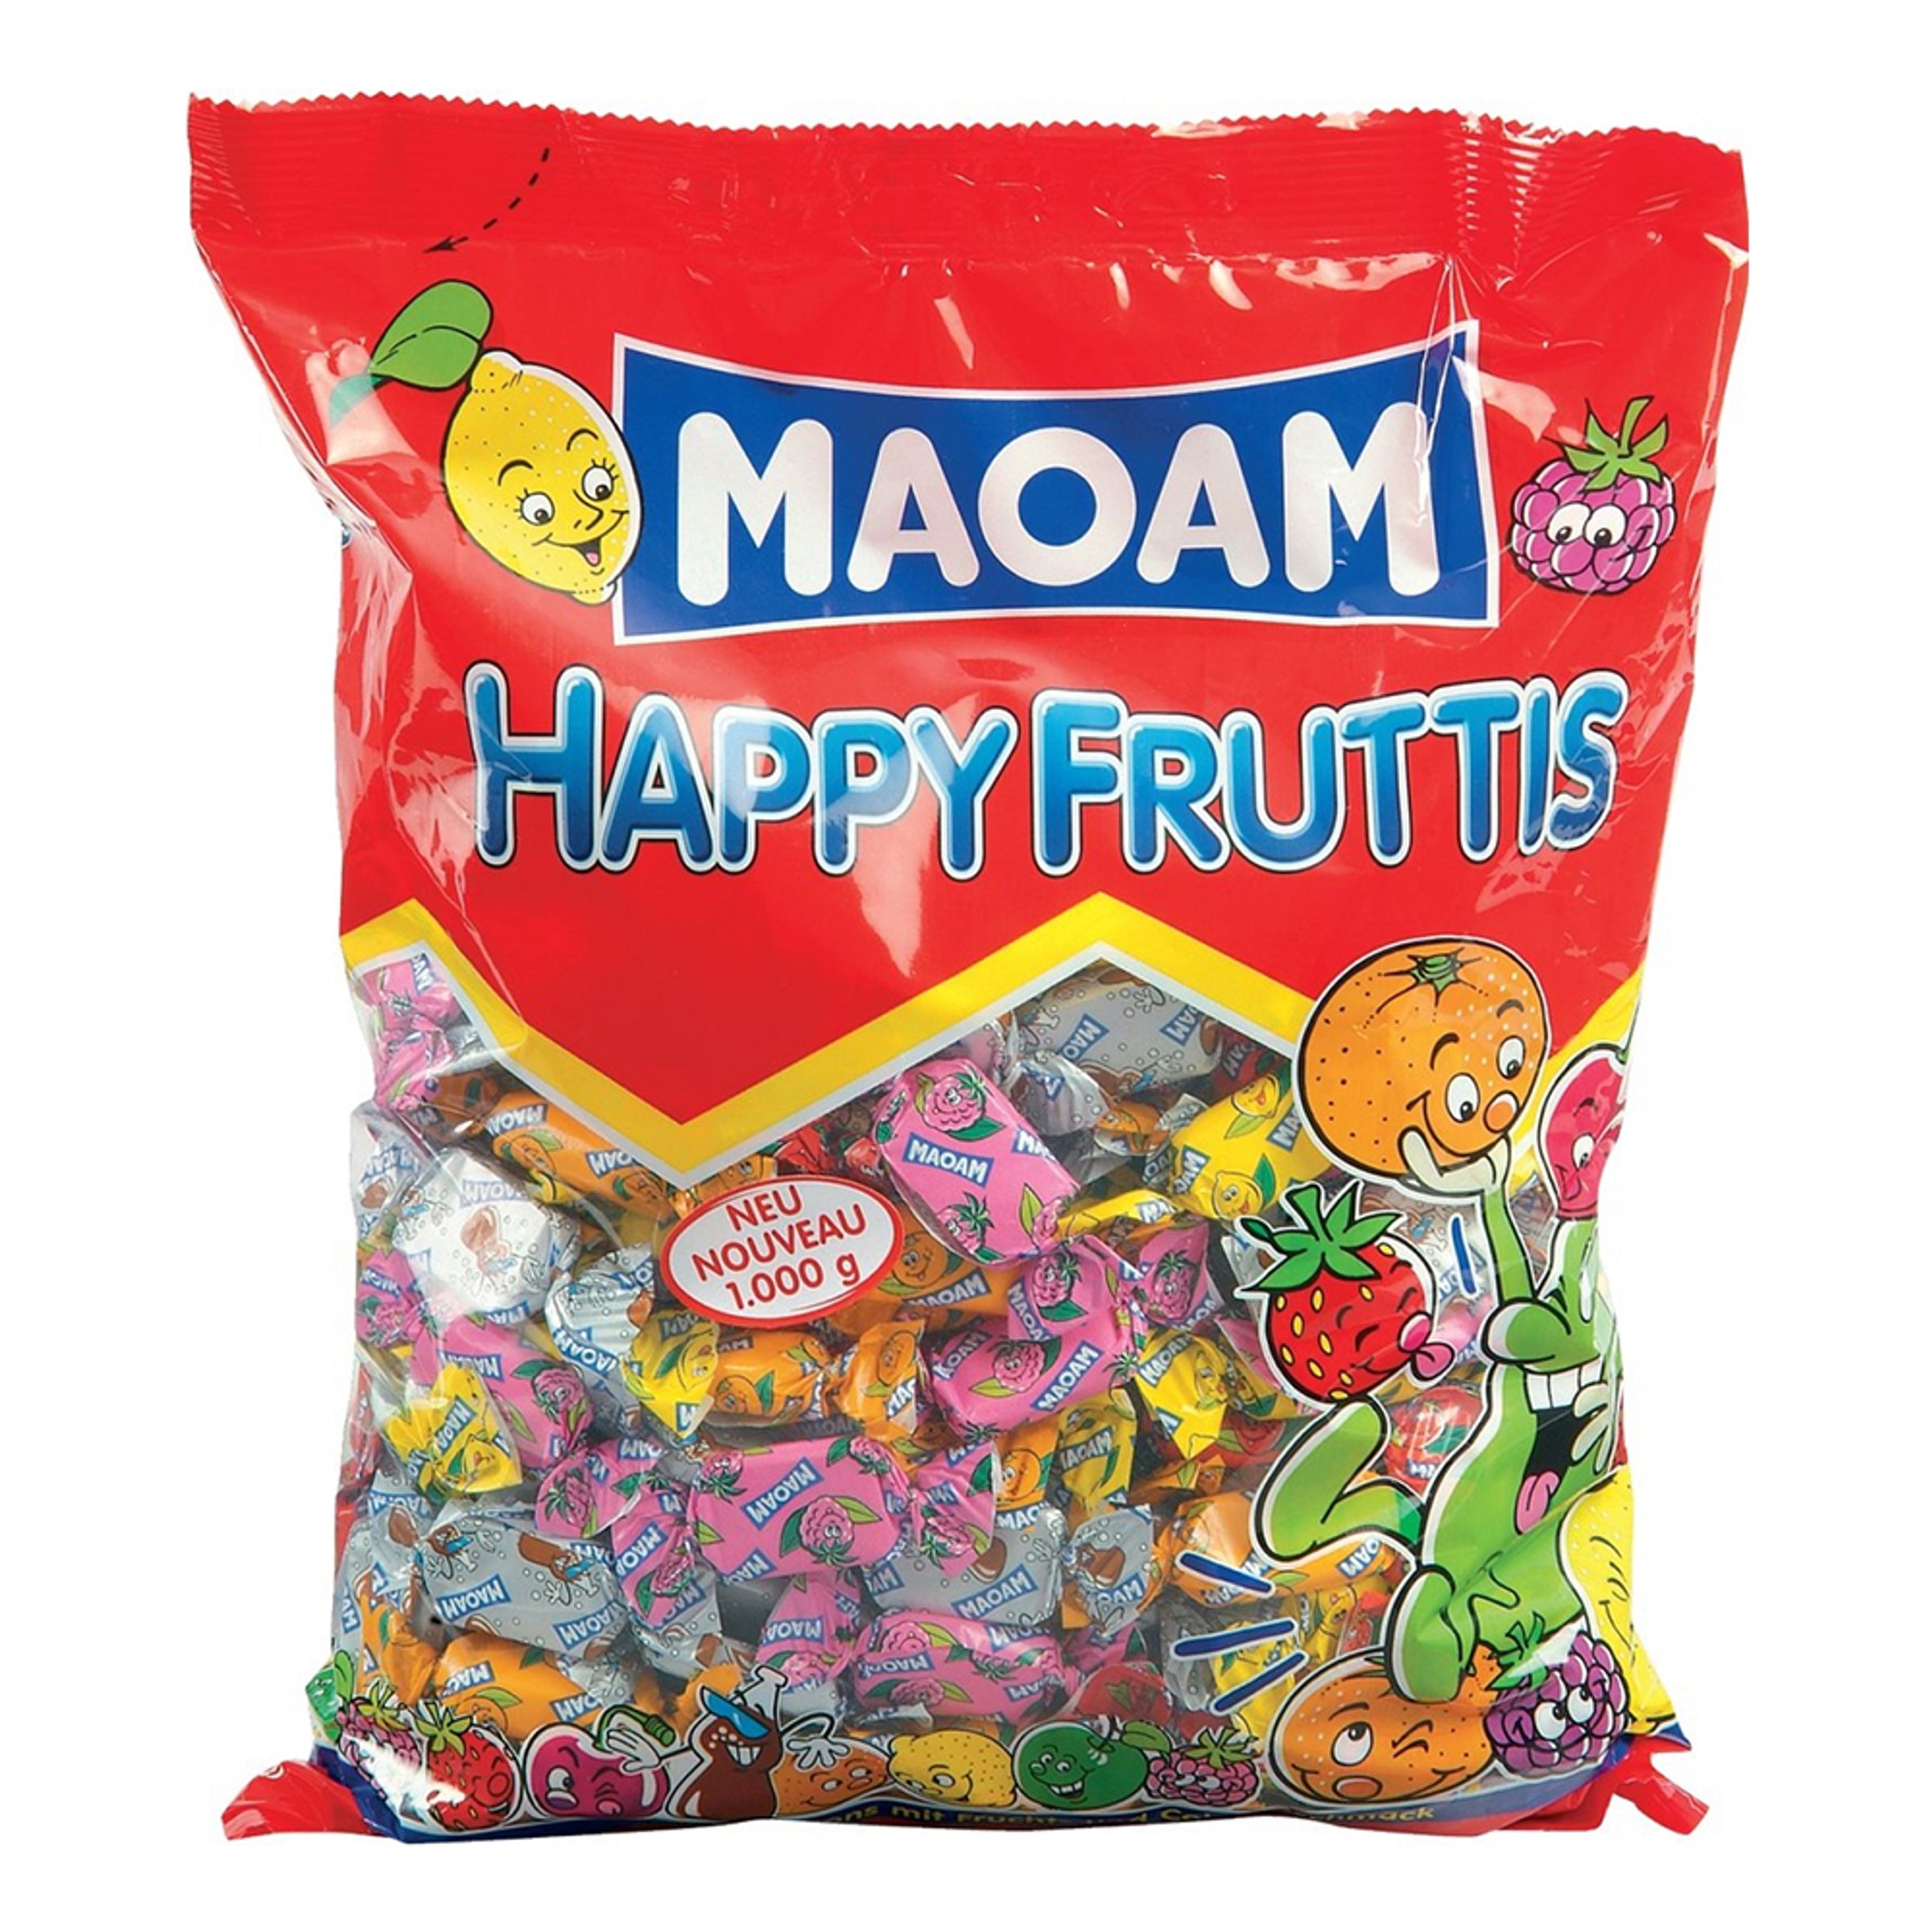 Maoam Happy Fruttis Storpack - 1 kg